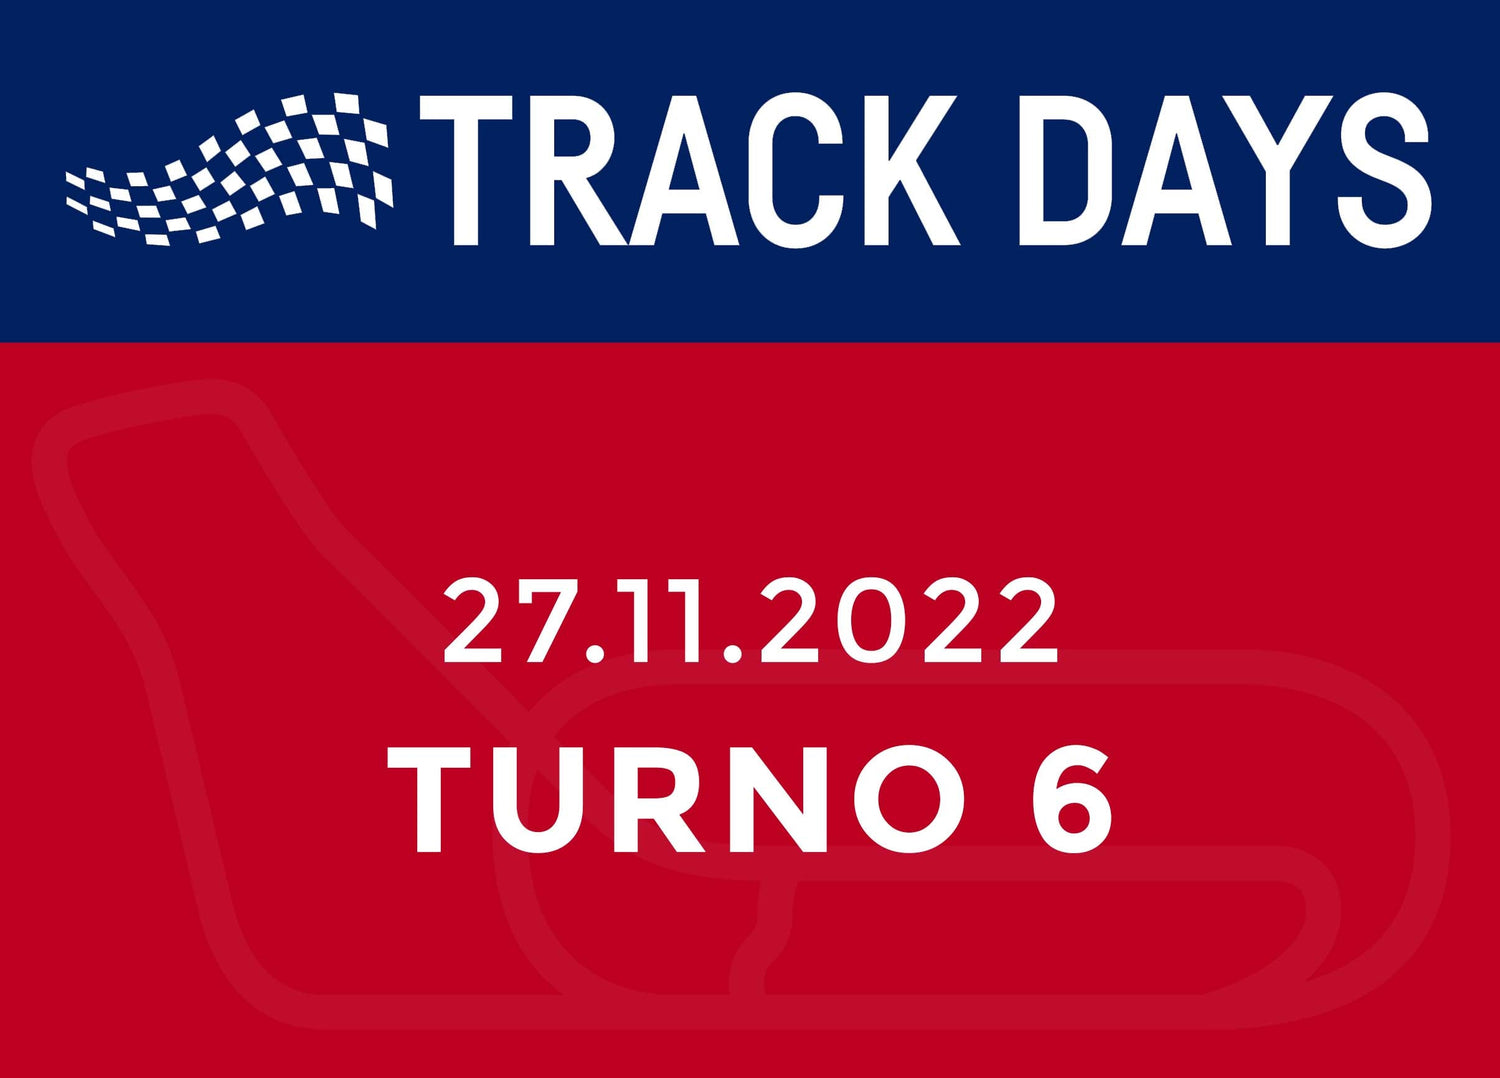 TRACK DAYS 27.11.22 TURNO 6